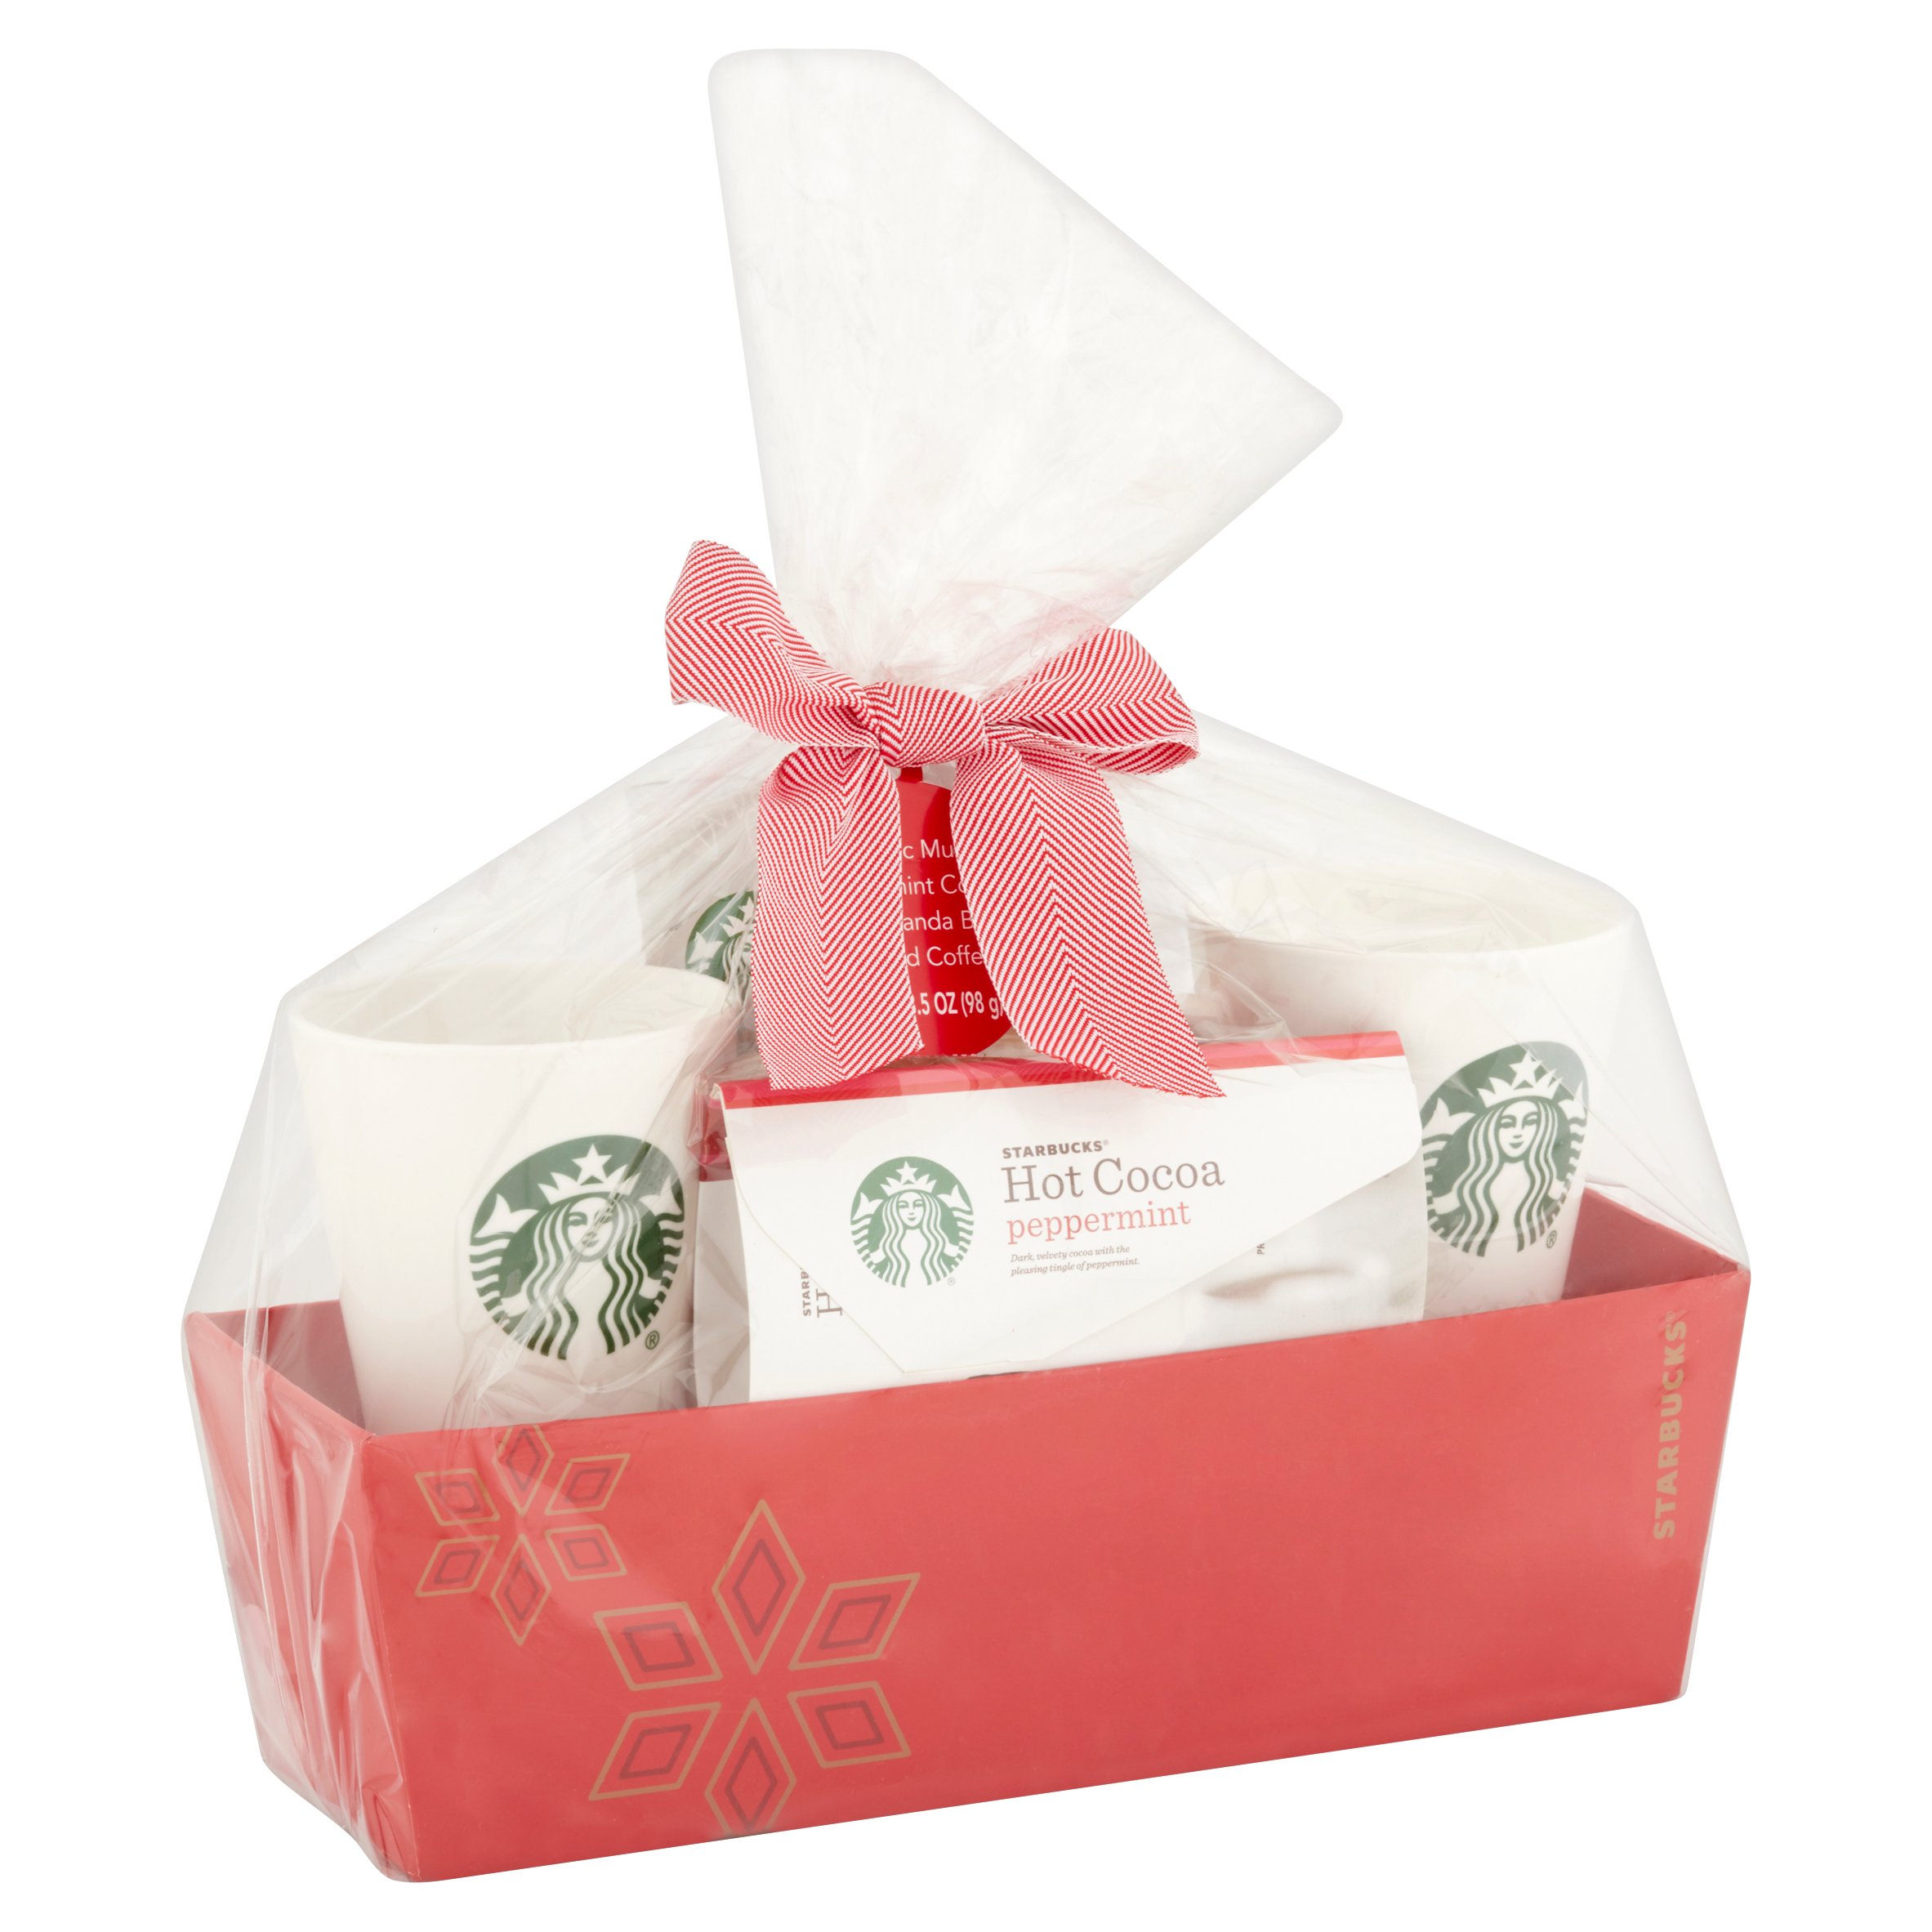 Starbucks Gift Set - image 2 of 5